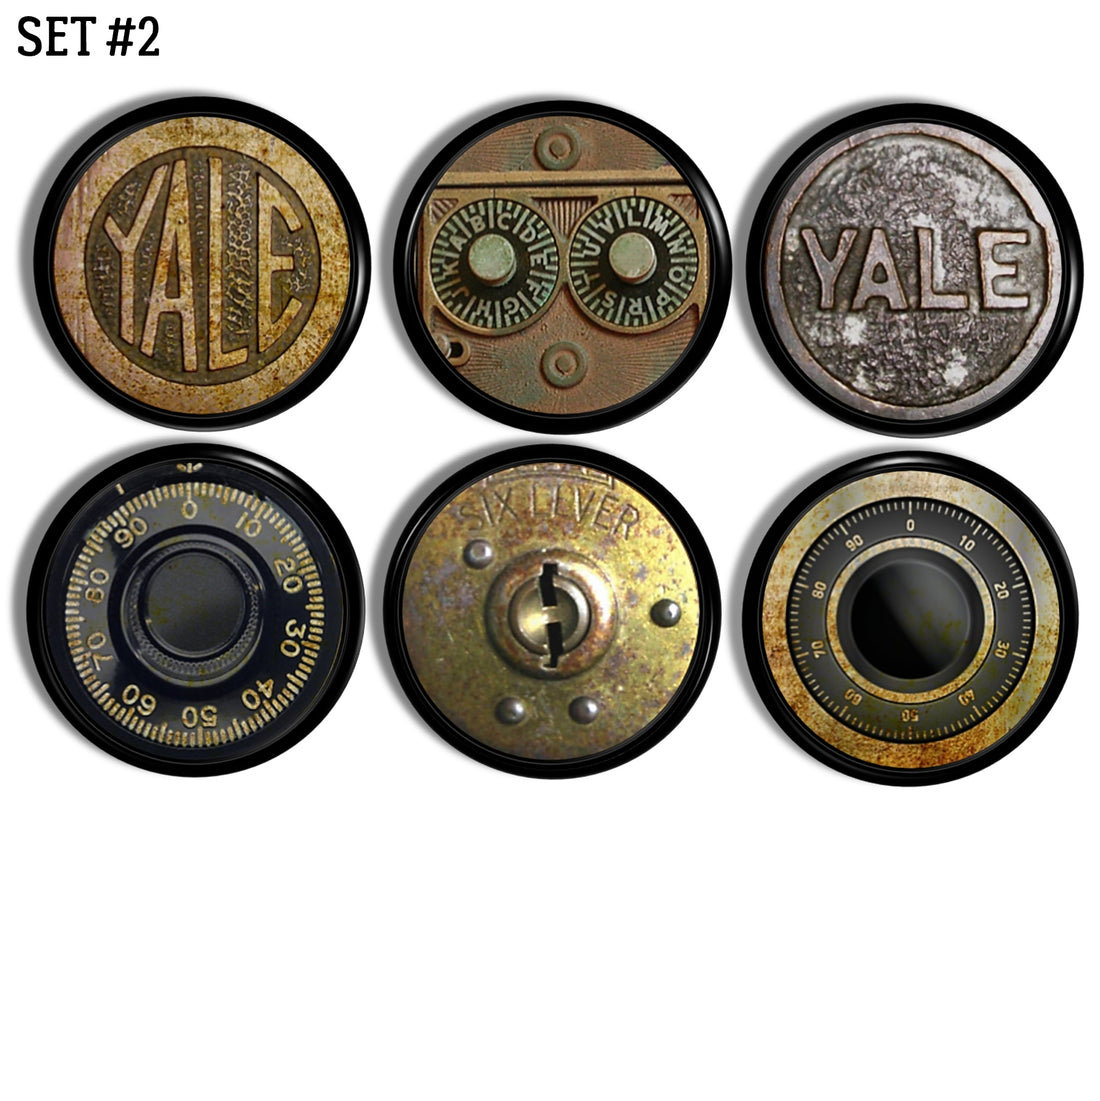 Old Victorian era safe parts knob set. Steampunk furniture hardware. Eclectic kitchen or bathroom cabinet handles.